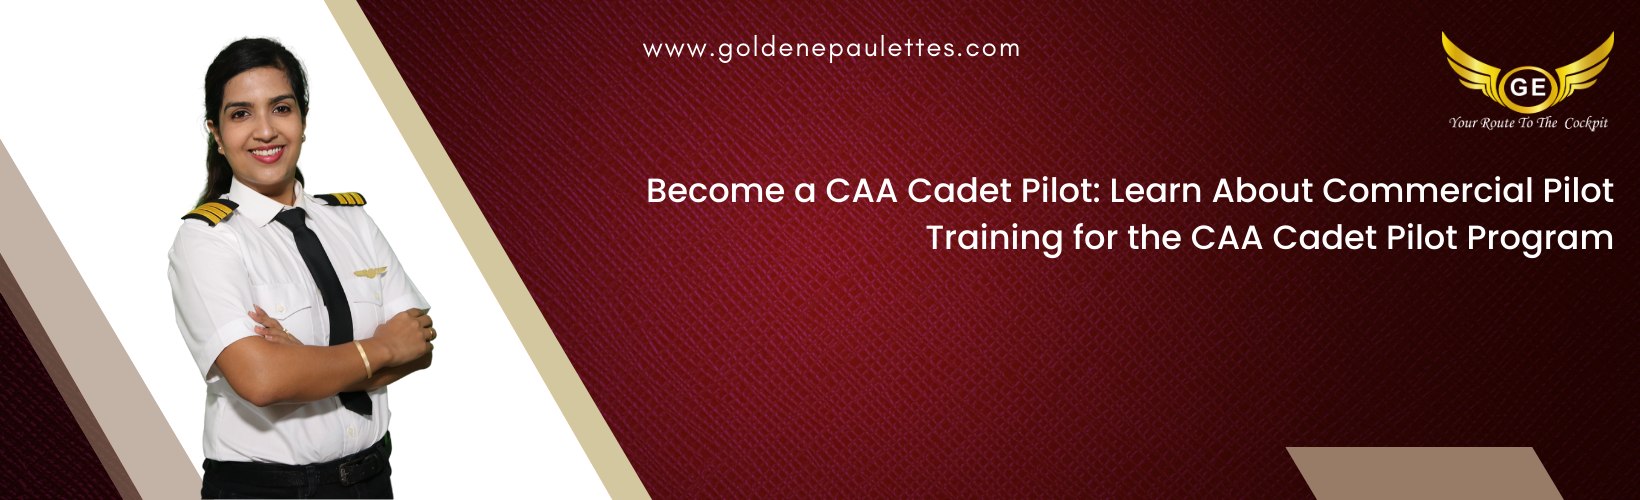 Commercial Pilot Training for the CAA Cadet Pilot Program